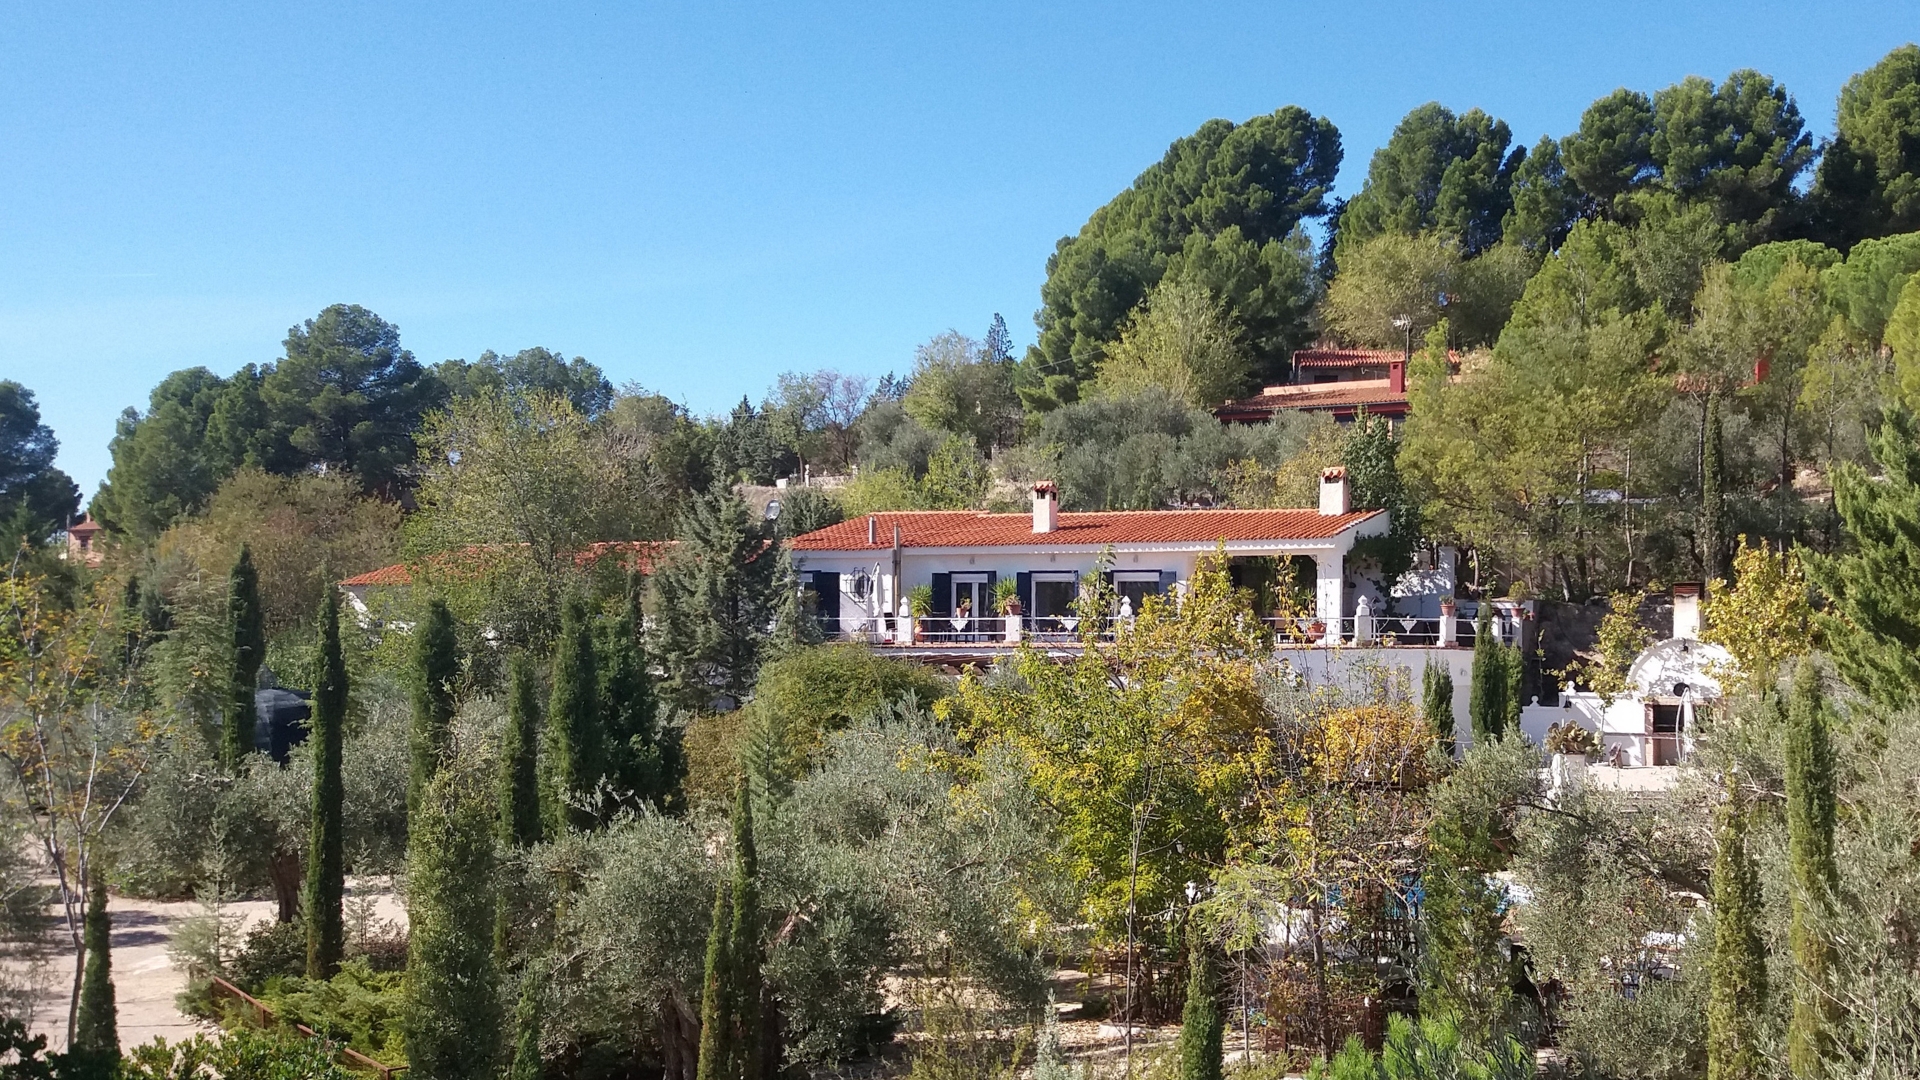 De tuin van Los Mofletes - eeuwenoude olijfboomgaard